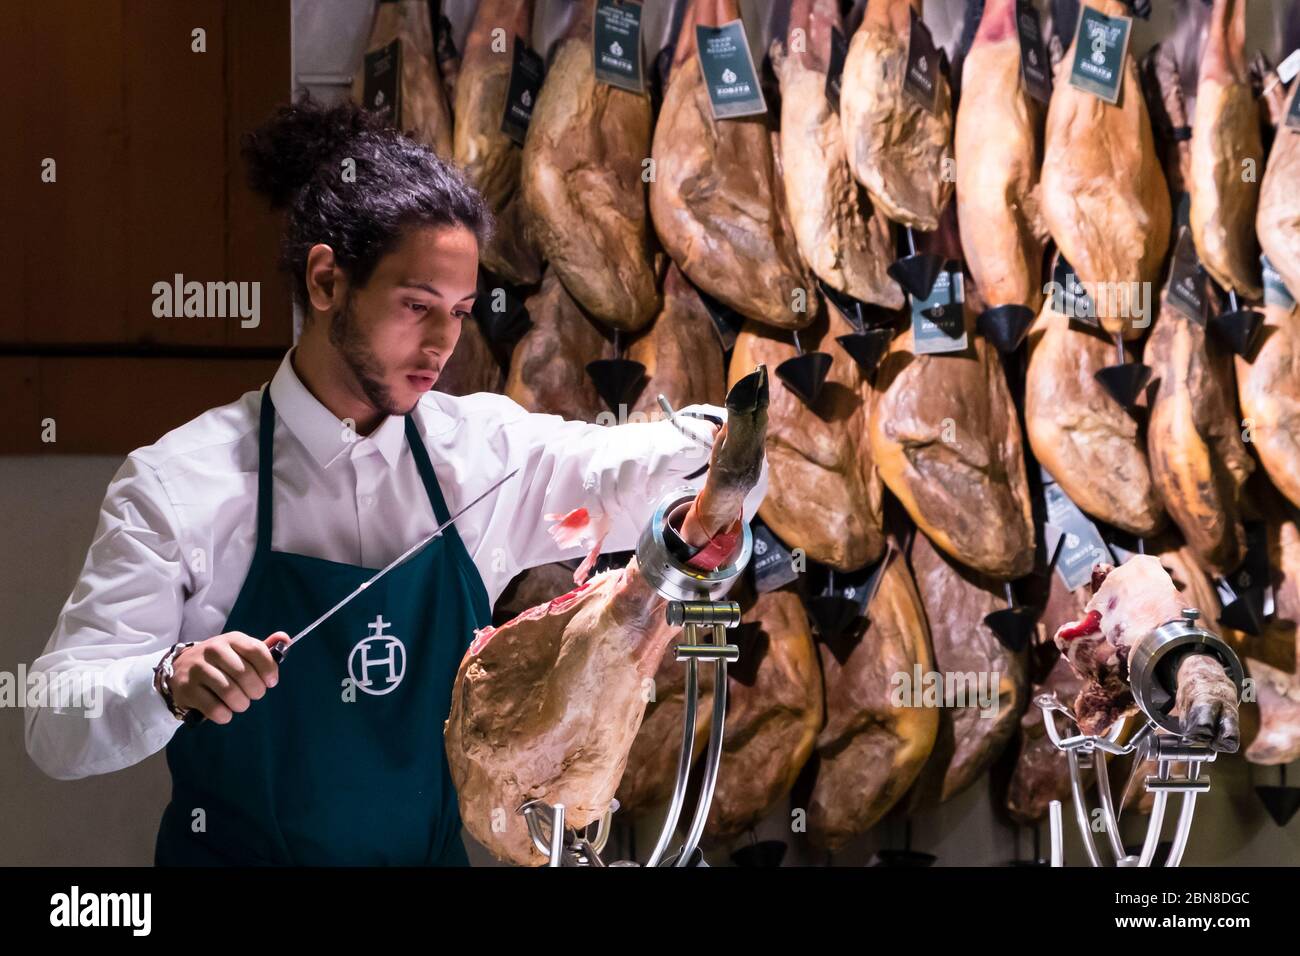 Male shop worker skilfully slices Iberian ham at Viandas, Leadenhall Market, London, UK Stock Photo